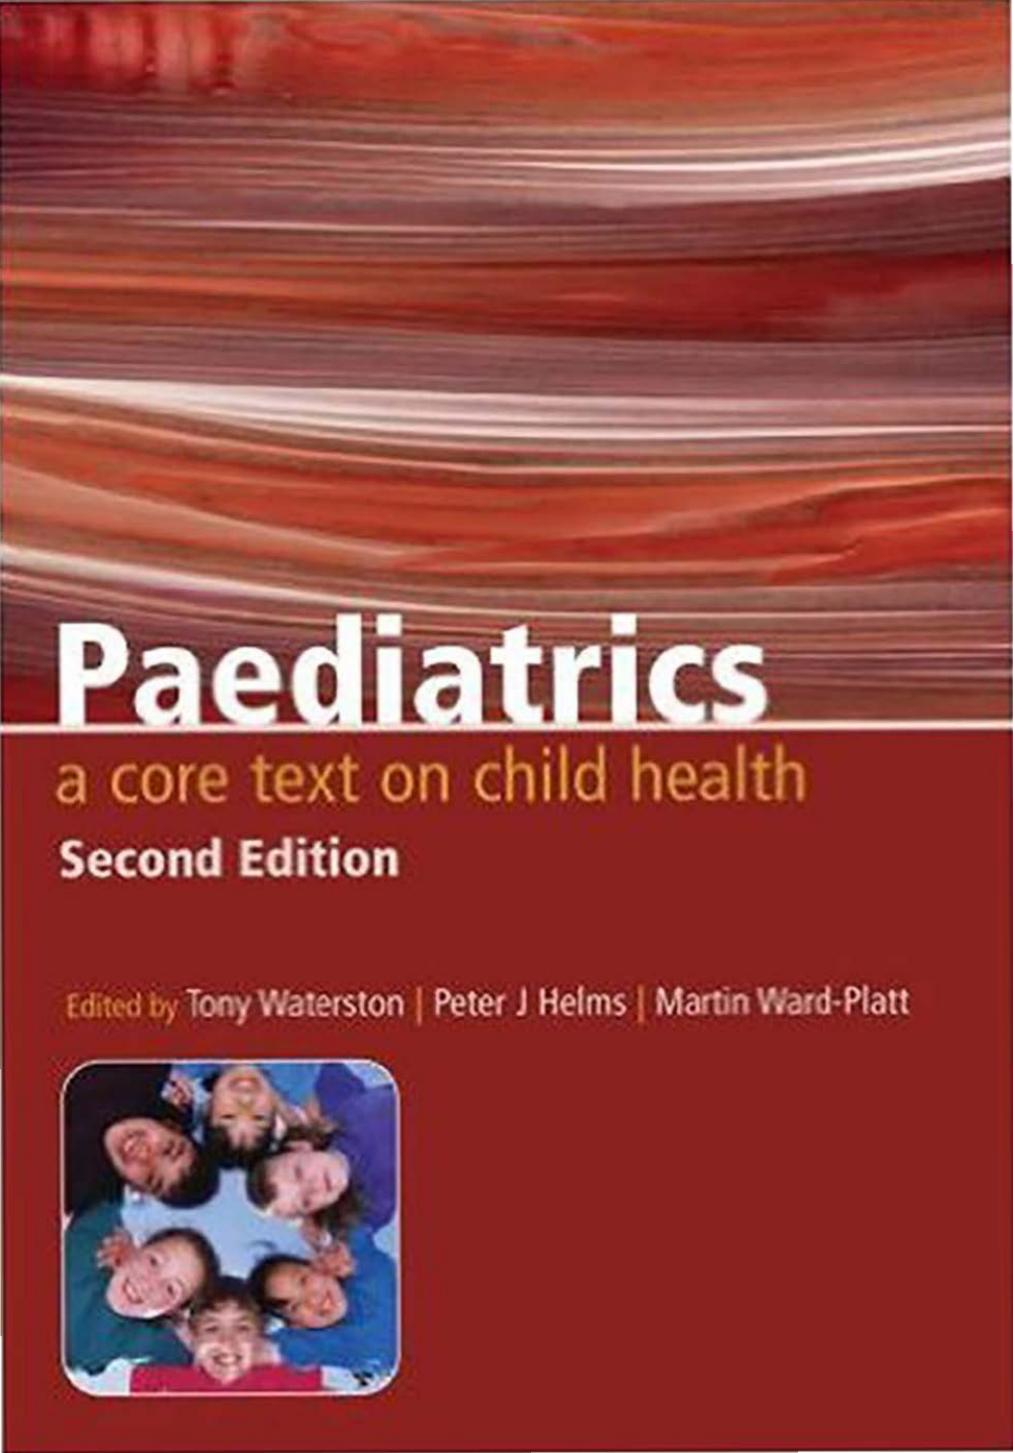 Paediatrics: A core text on child health